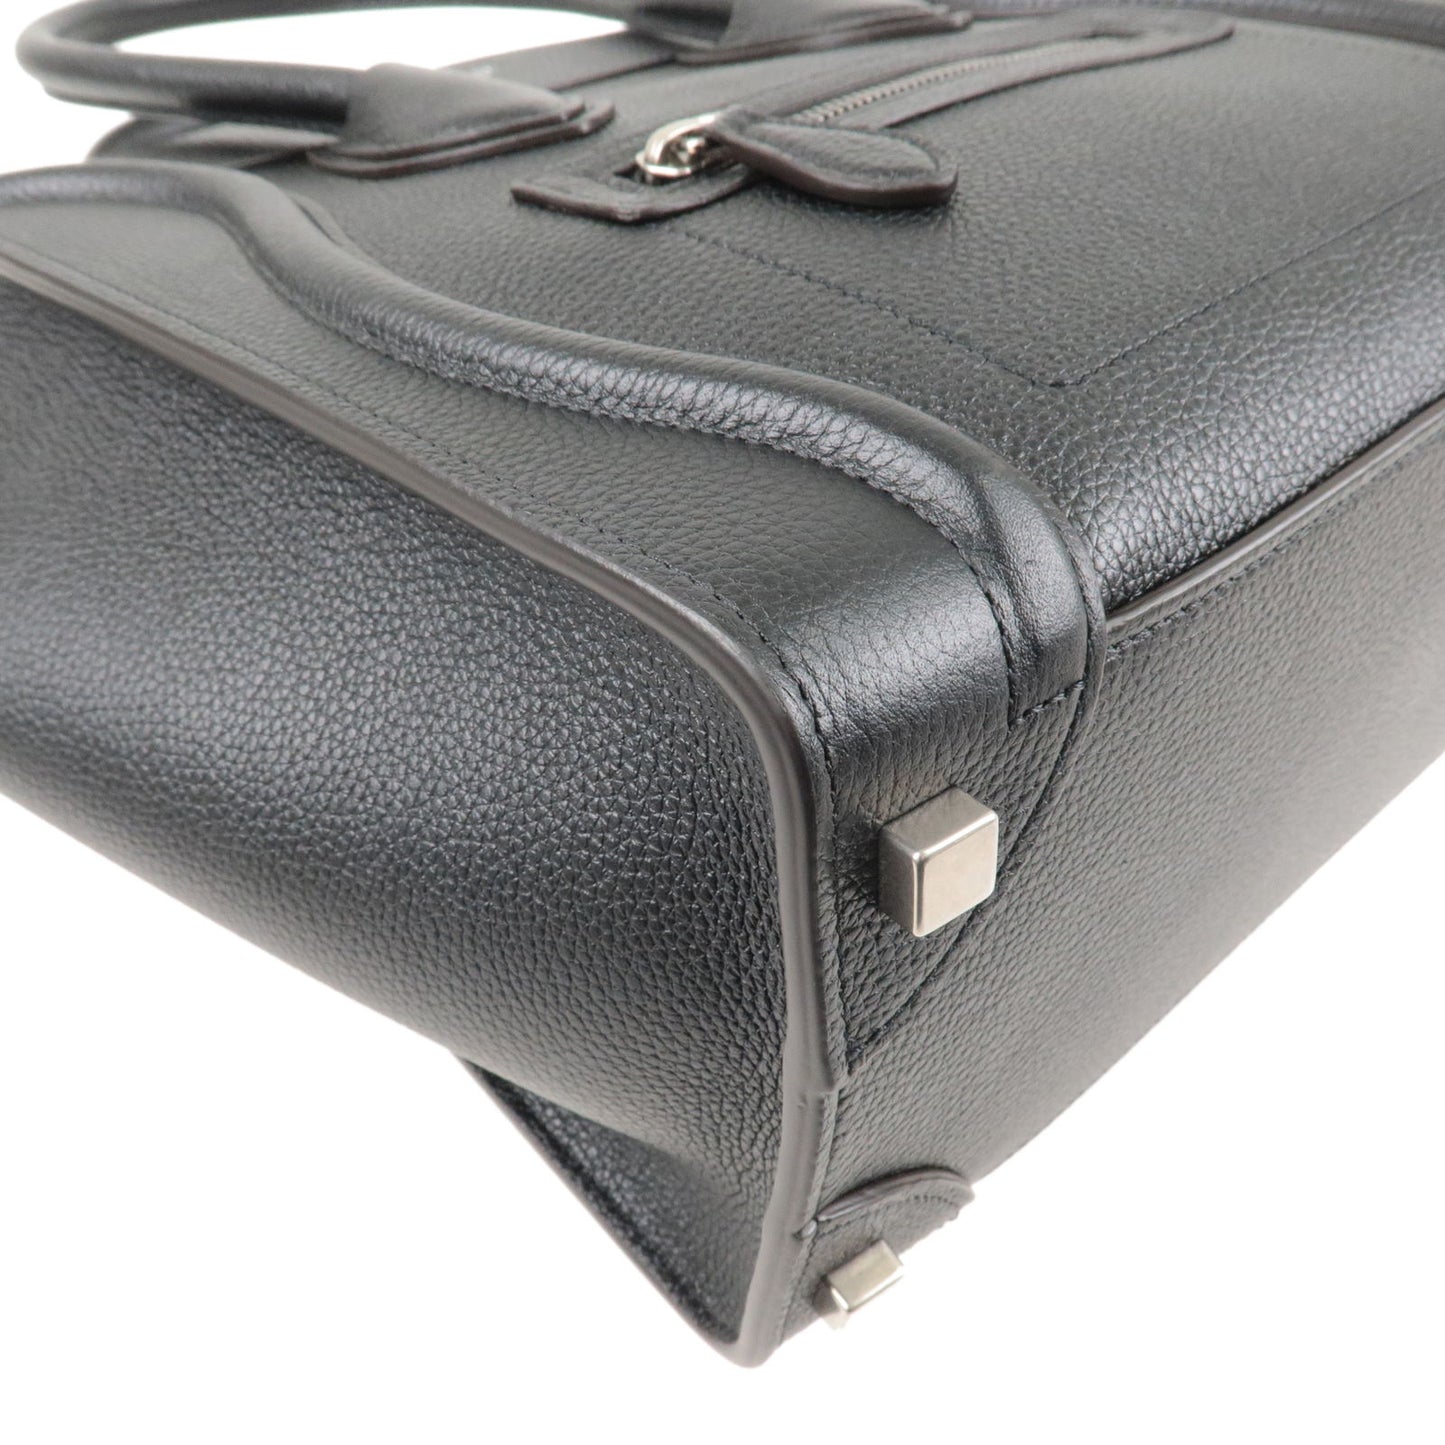 CELINE Luggage Micro Shopper Leather Hand Bag Black 189793